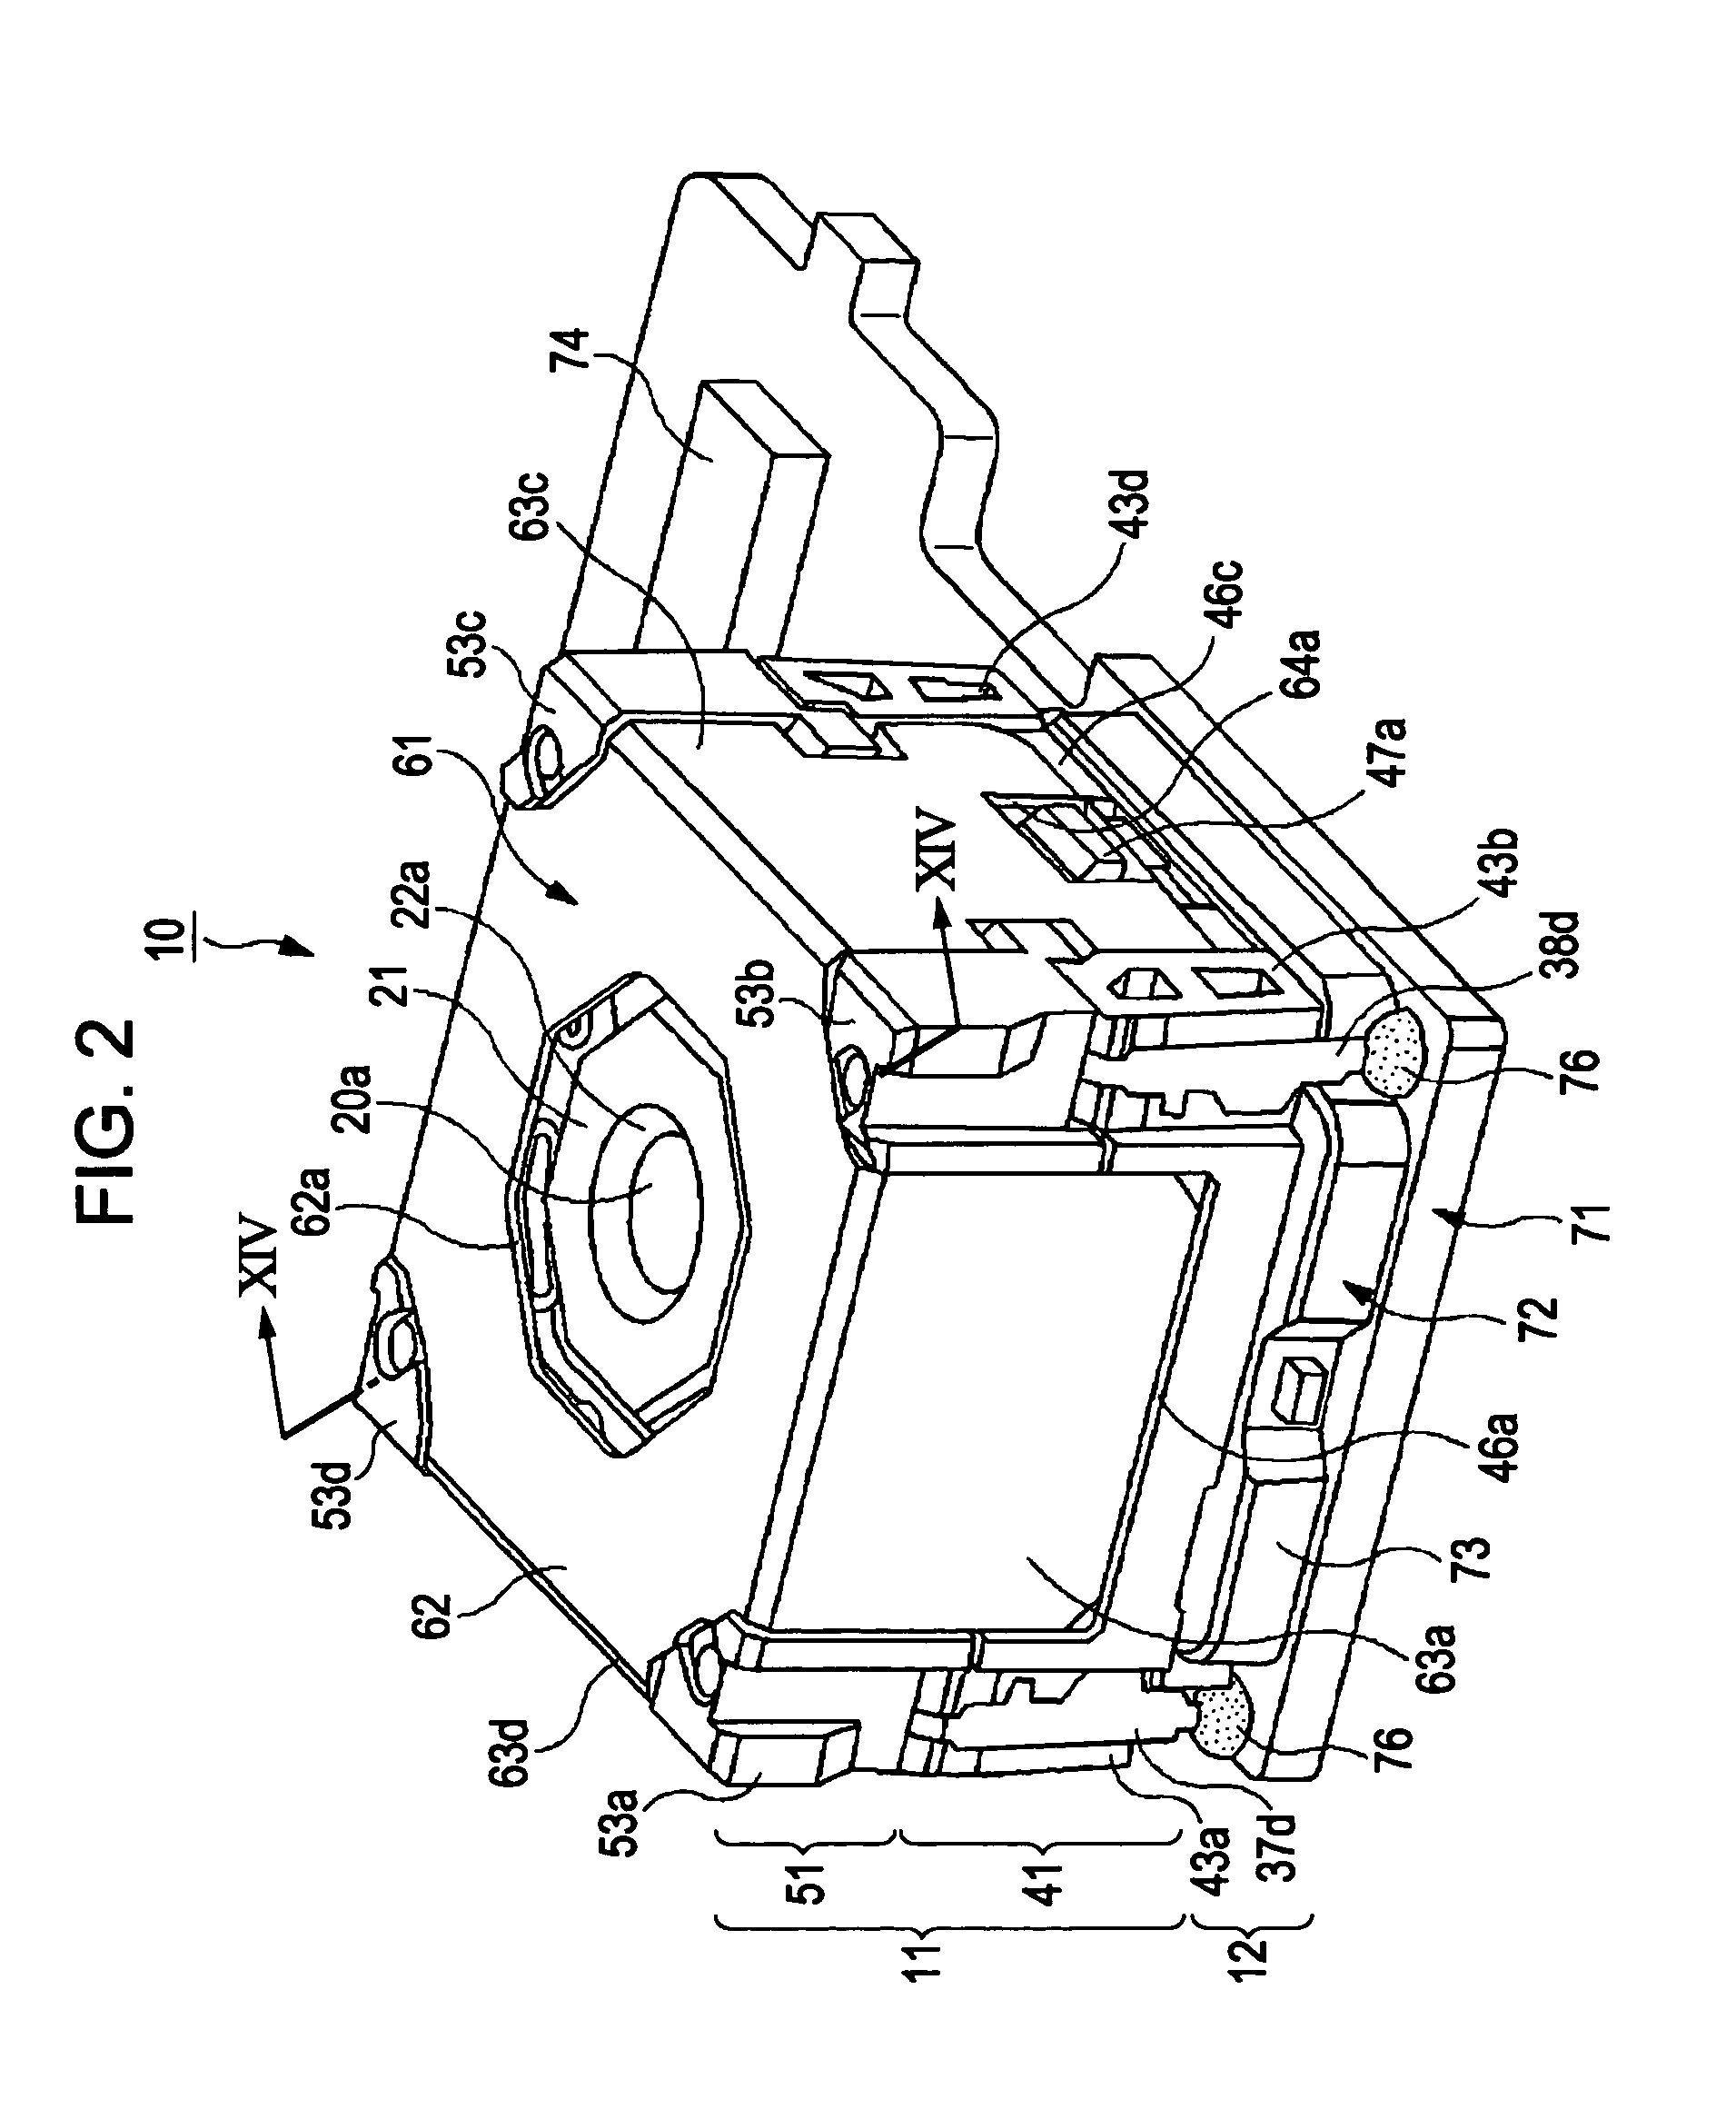 Lens barrel, camera module, and imaging apparatus